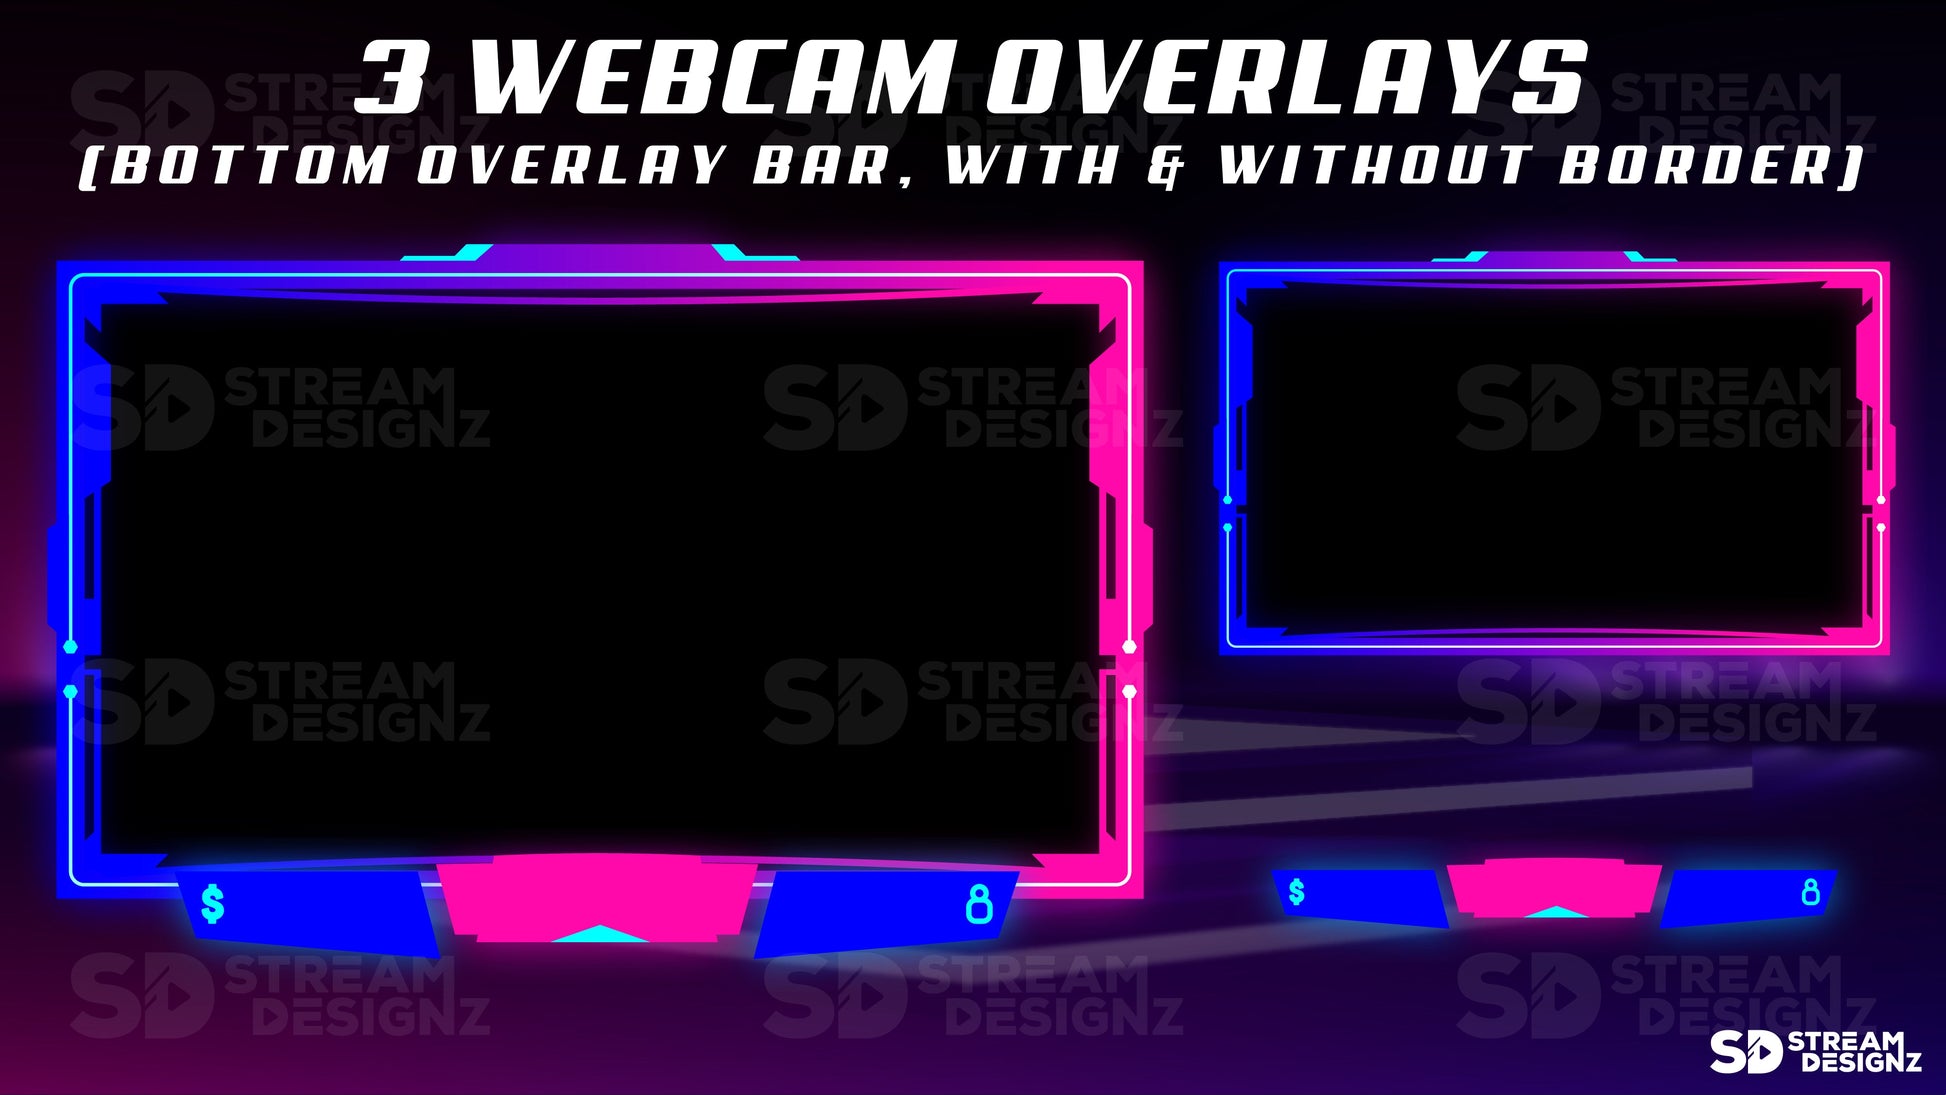 Stream Designz Carousel Webcam Overlays - Illuminate